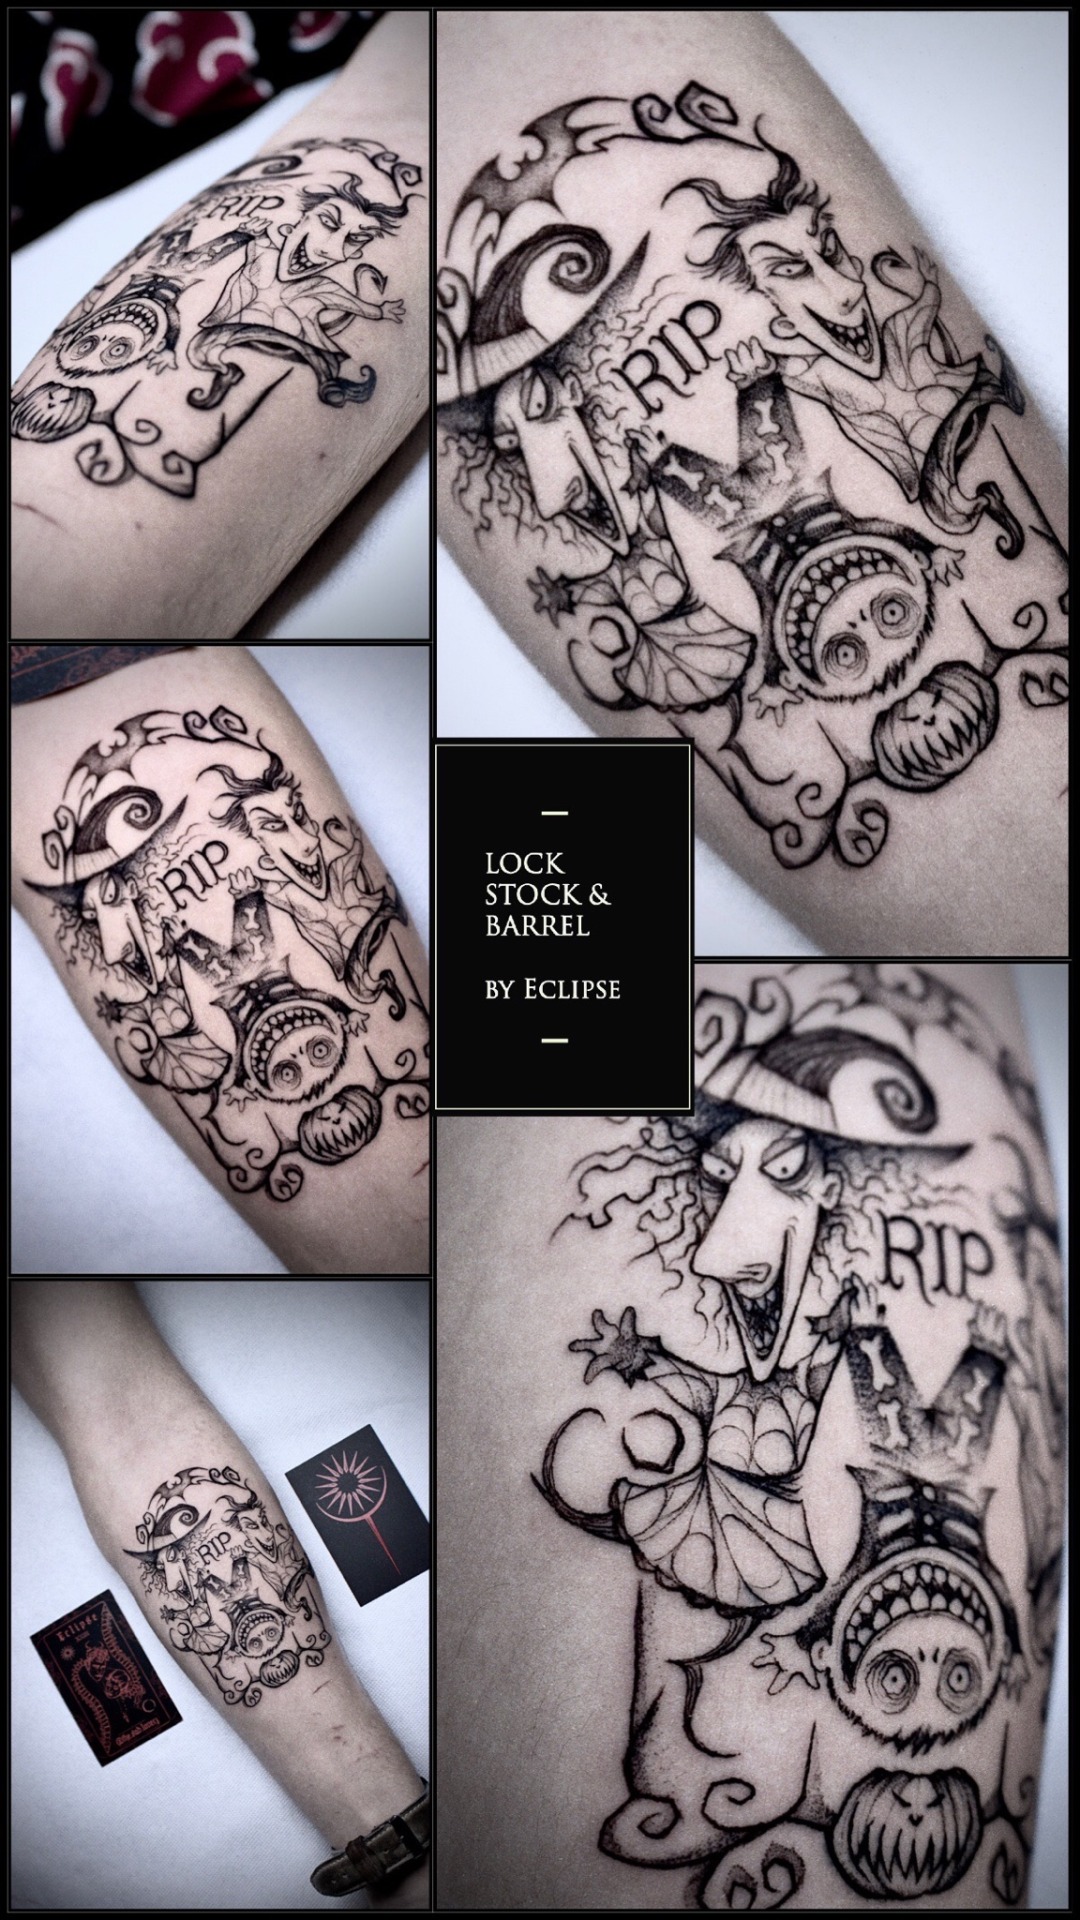 Foolish Dreams on Tumblr: Constelação de Libra⭐️✨ Libra Constellation ⭐️✨♎️  #tattoo #tatuagem #astrology #constelação #constellation #libra...